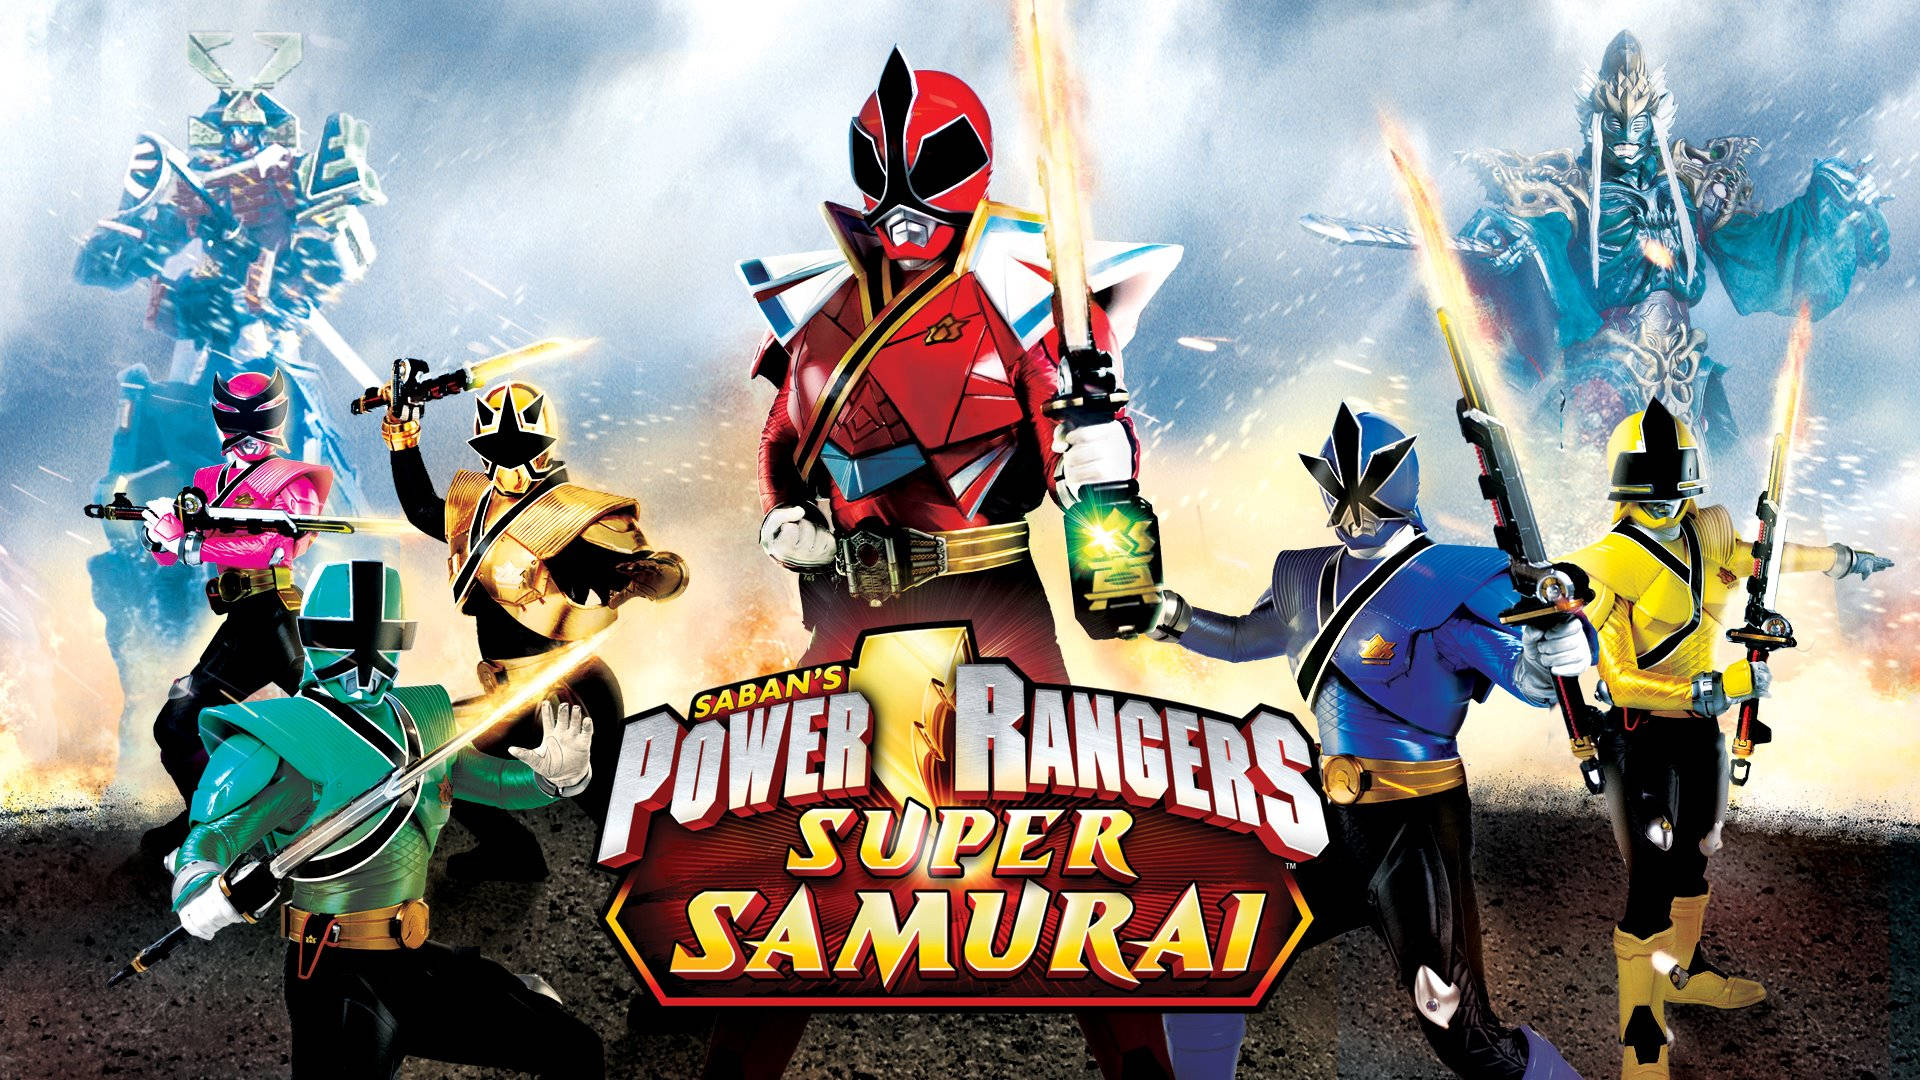 Power Rangers - The Mighty Super Samurai Force Wallpaper